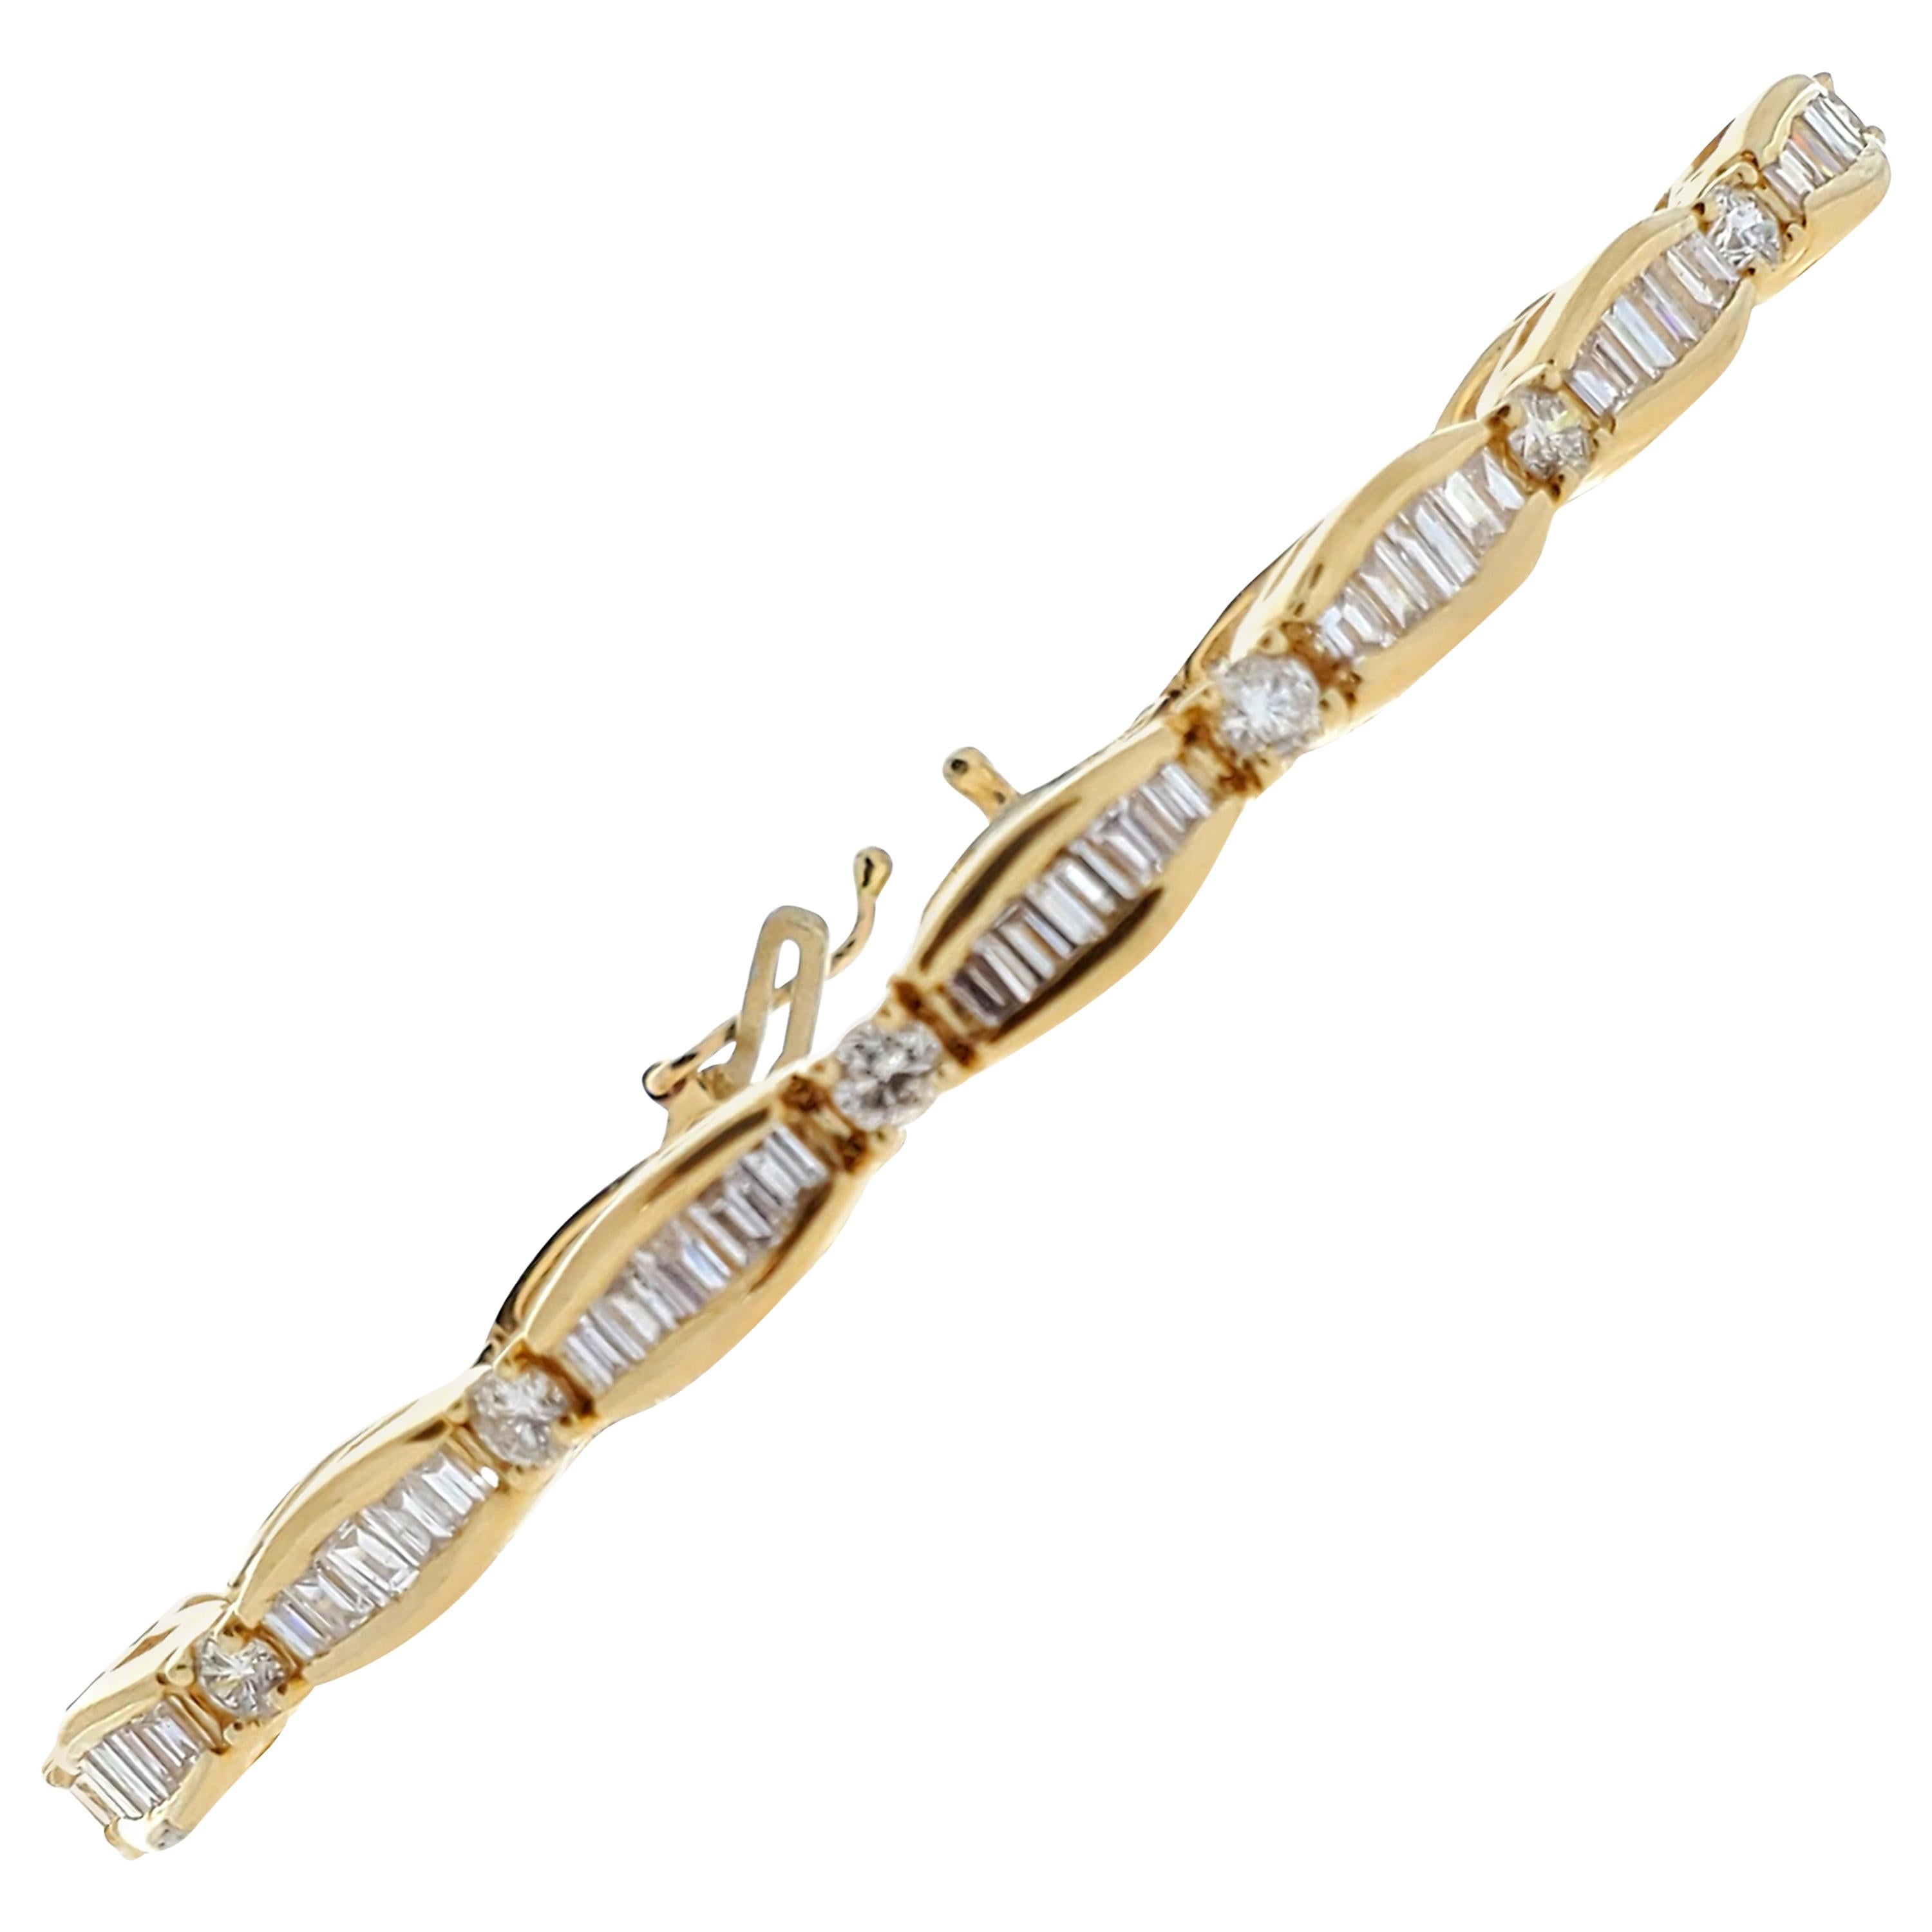 4.25 Carat White Diamond Fashion Bracelet 14 Karat Yellow Gold